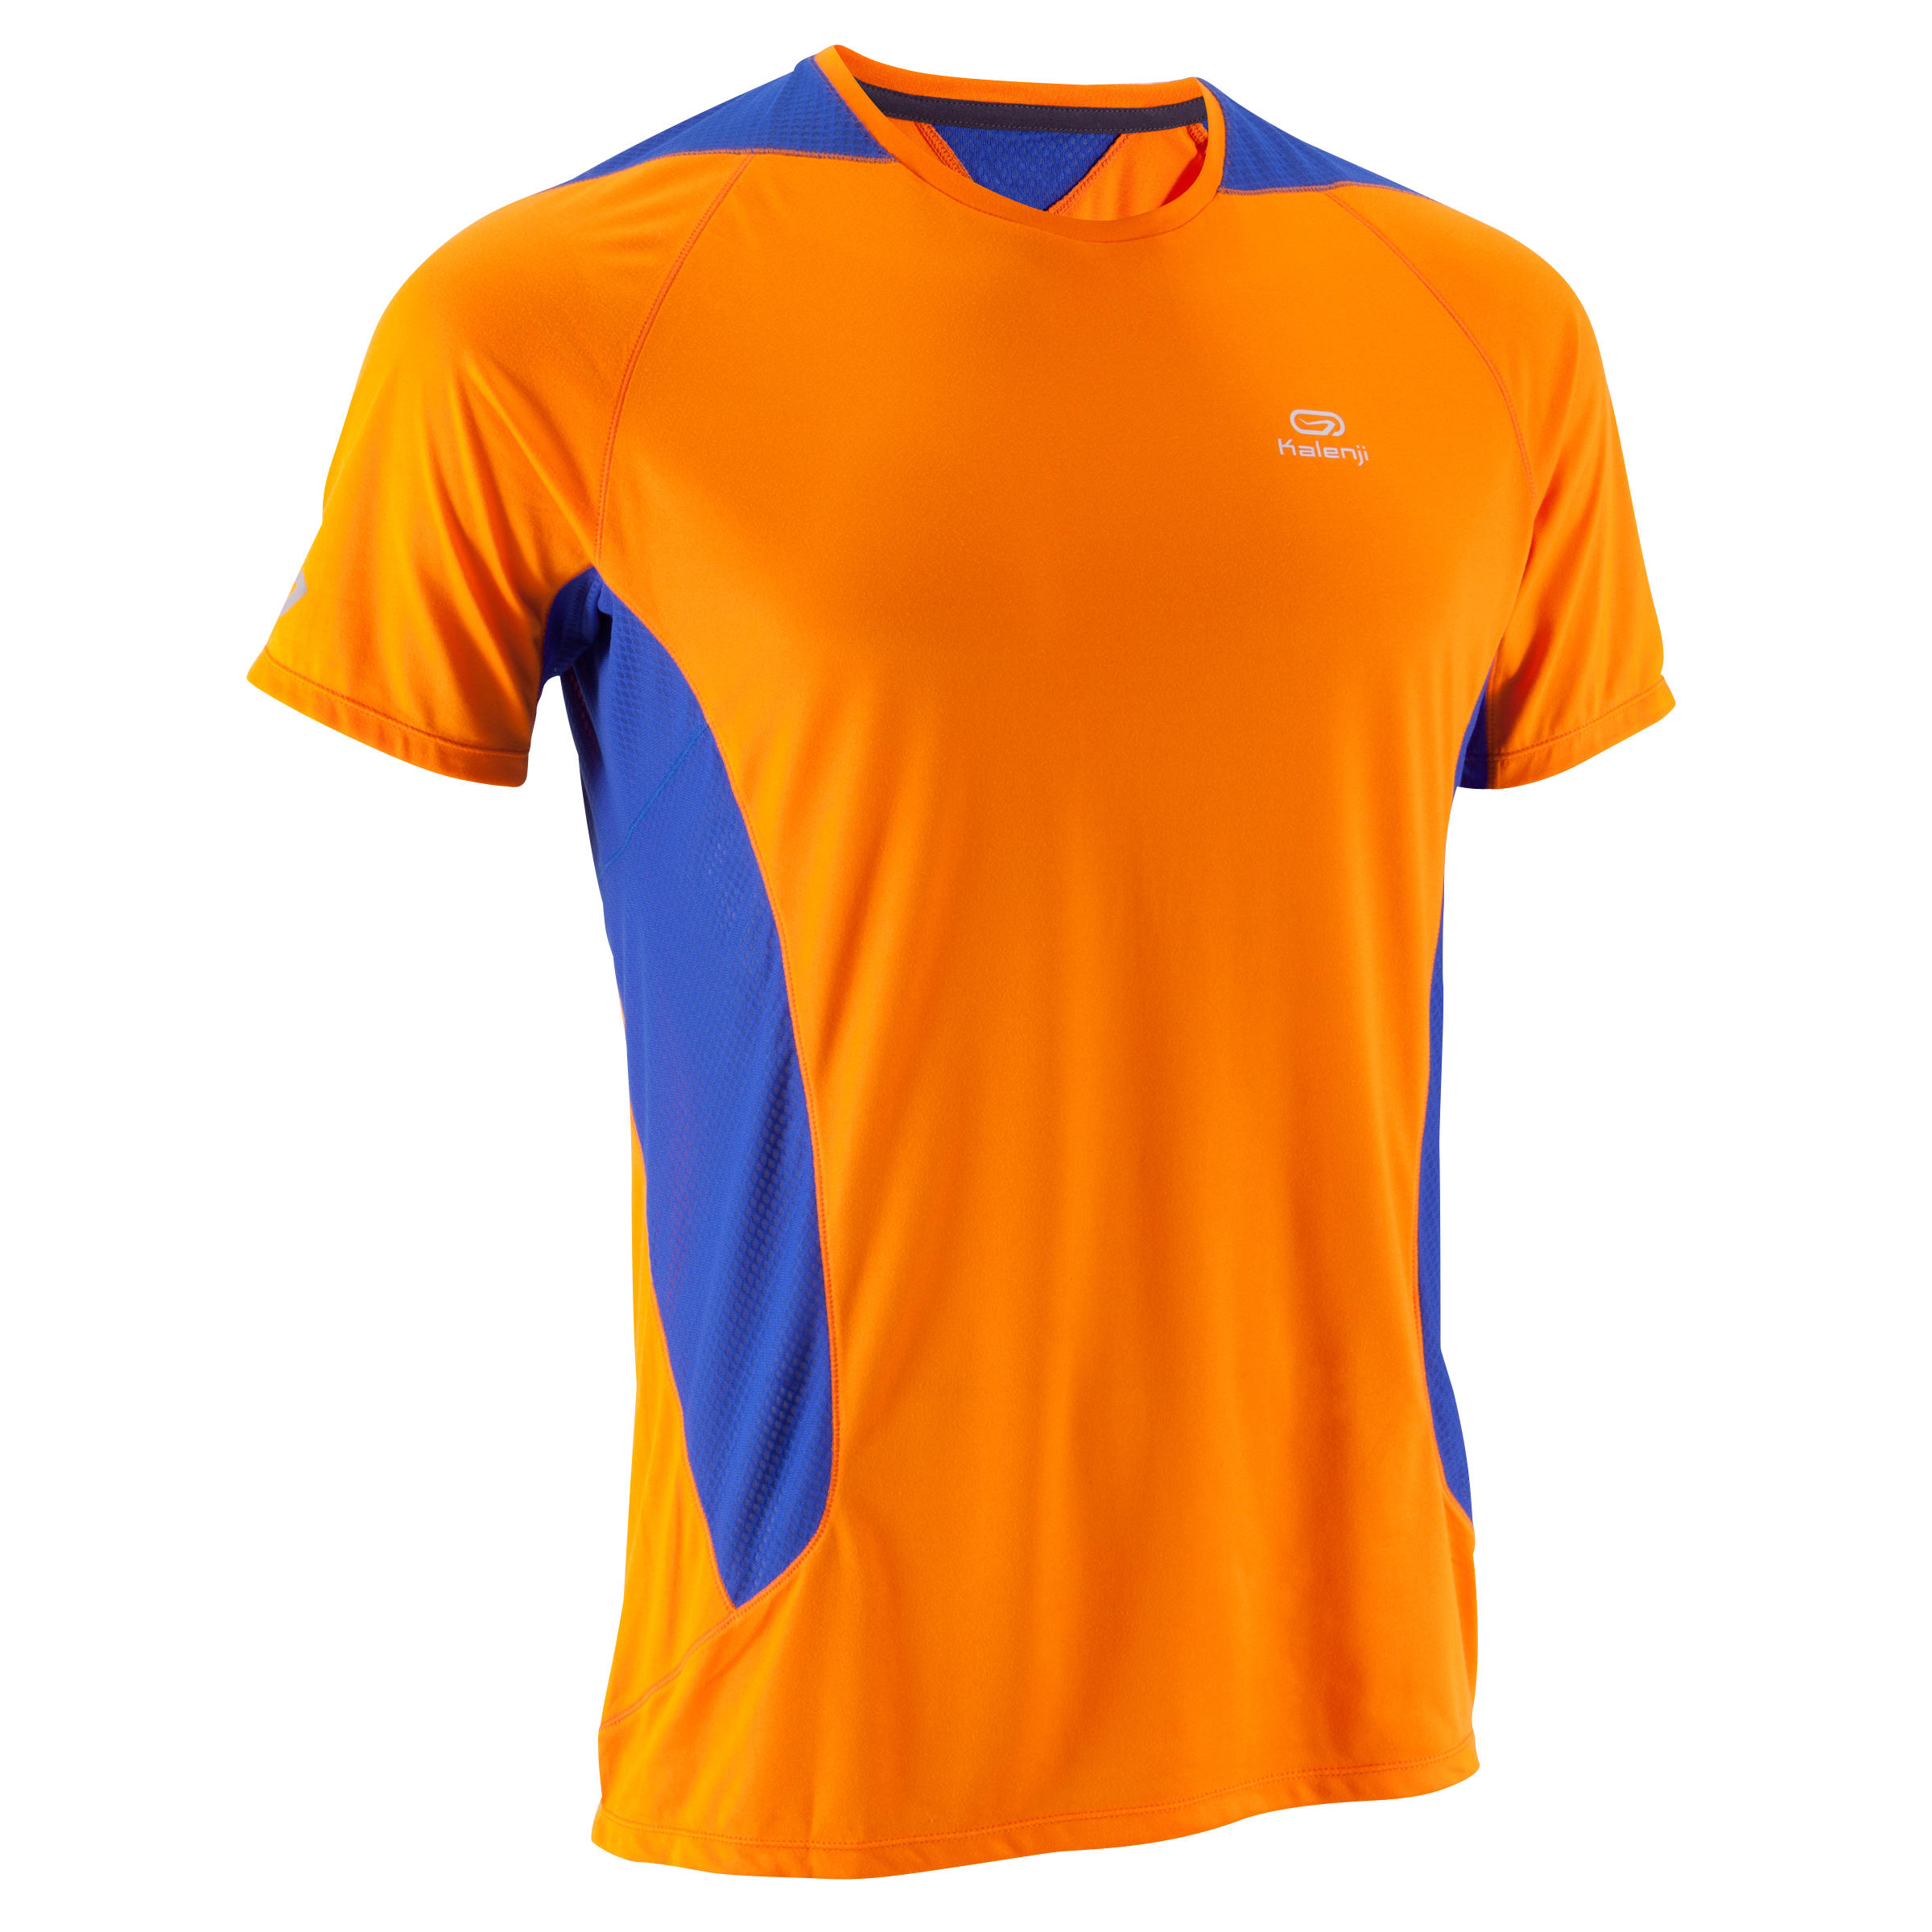 KALENJI Elio Men's Running T-Shirt - orange/blue